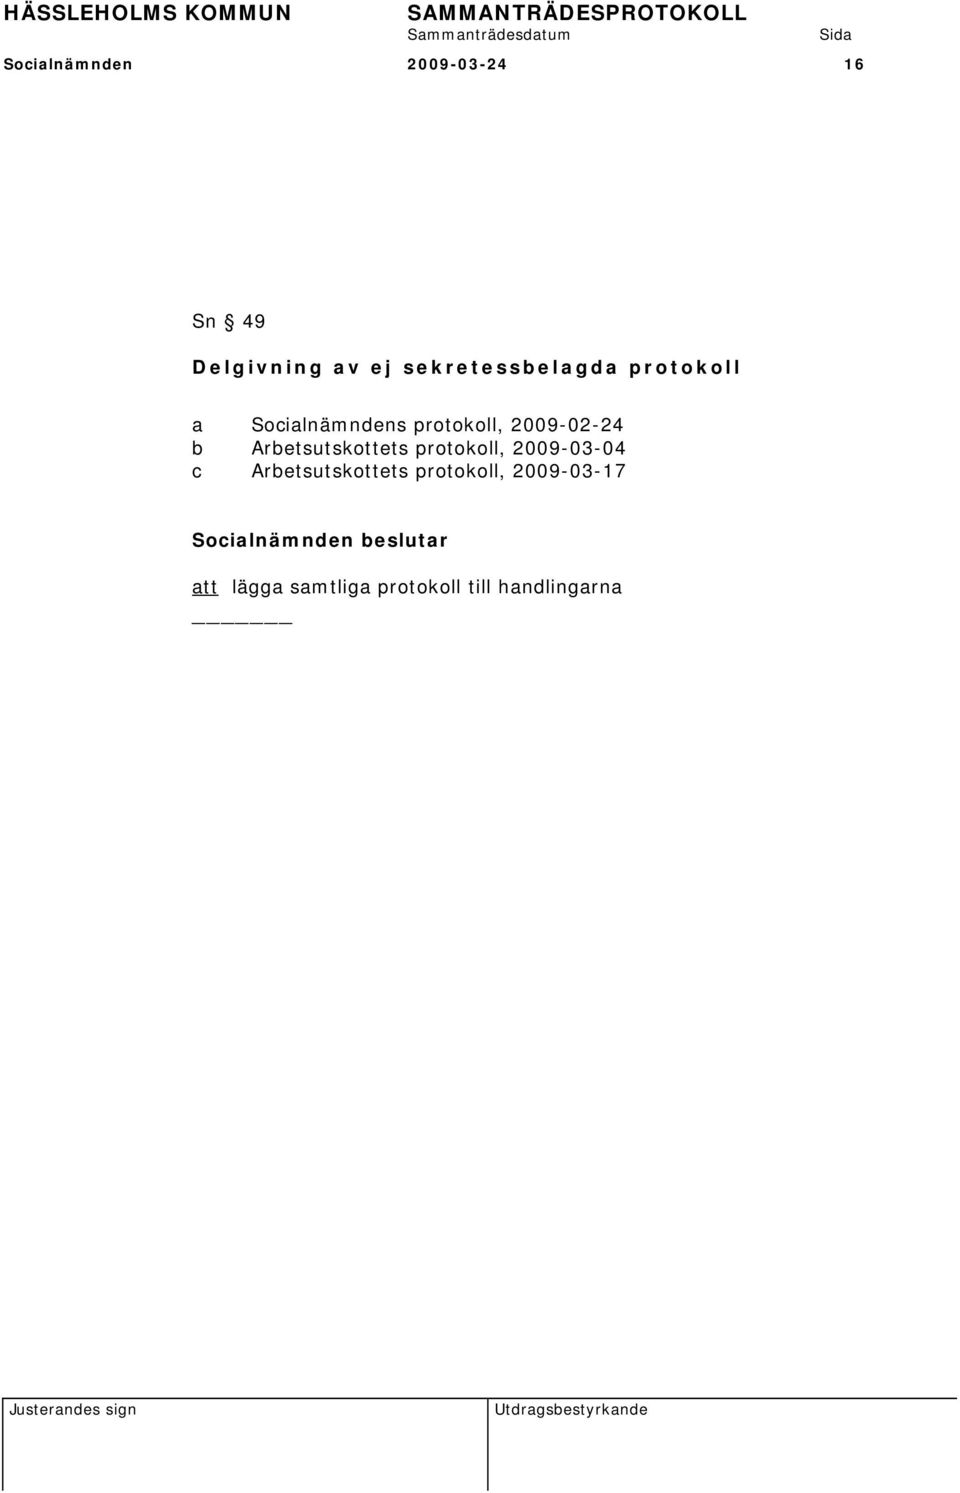 2009-02-24 b Arbetsutskottets protokoll, 2009-03-04 c